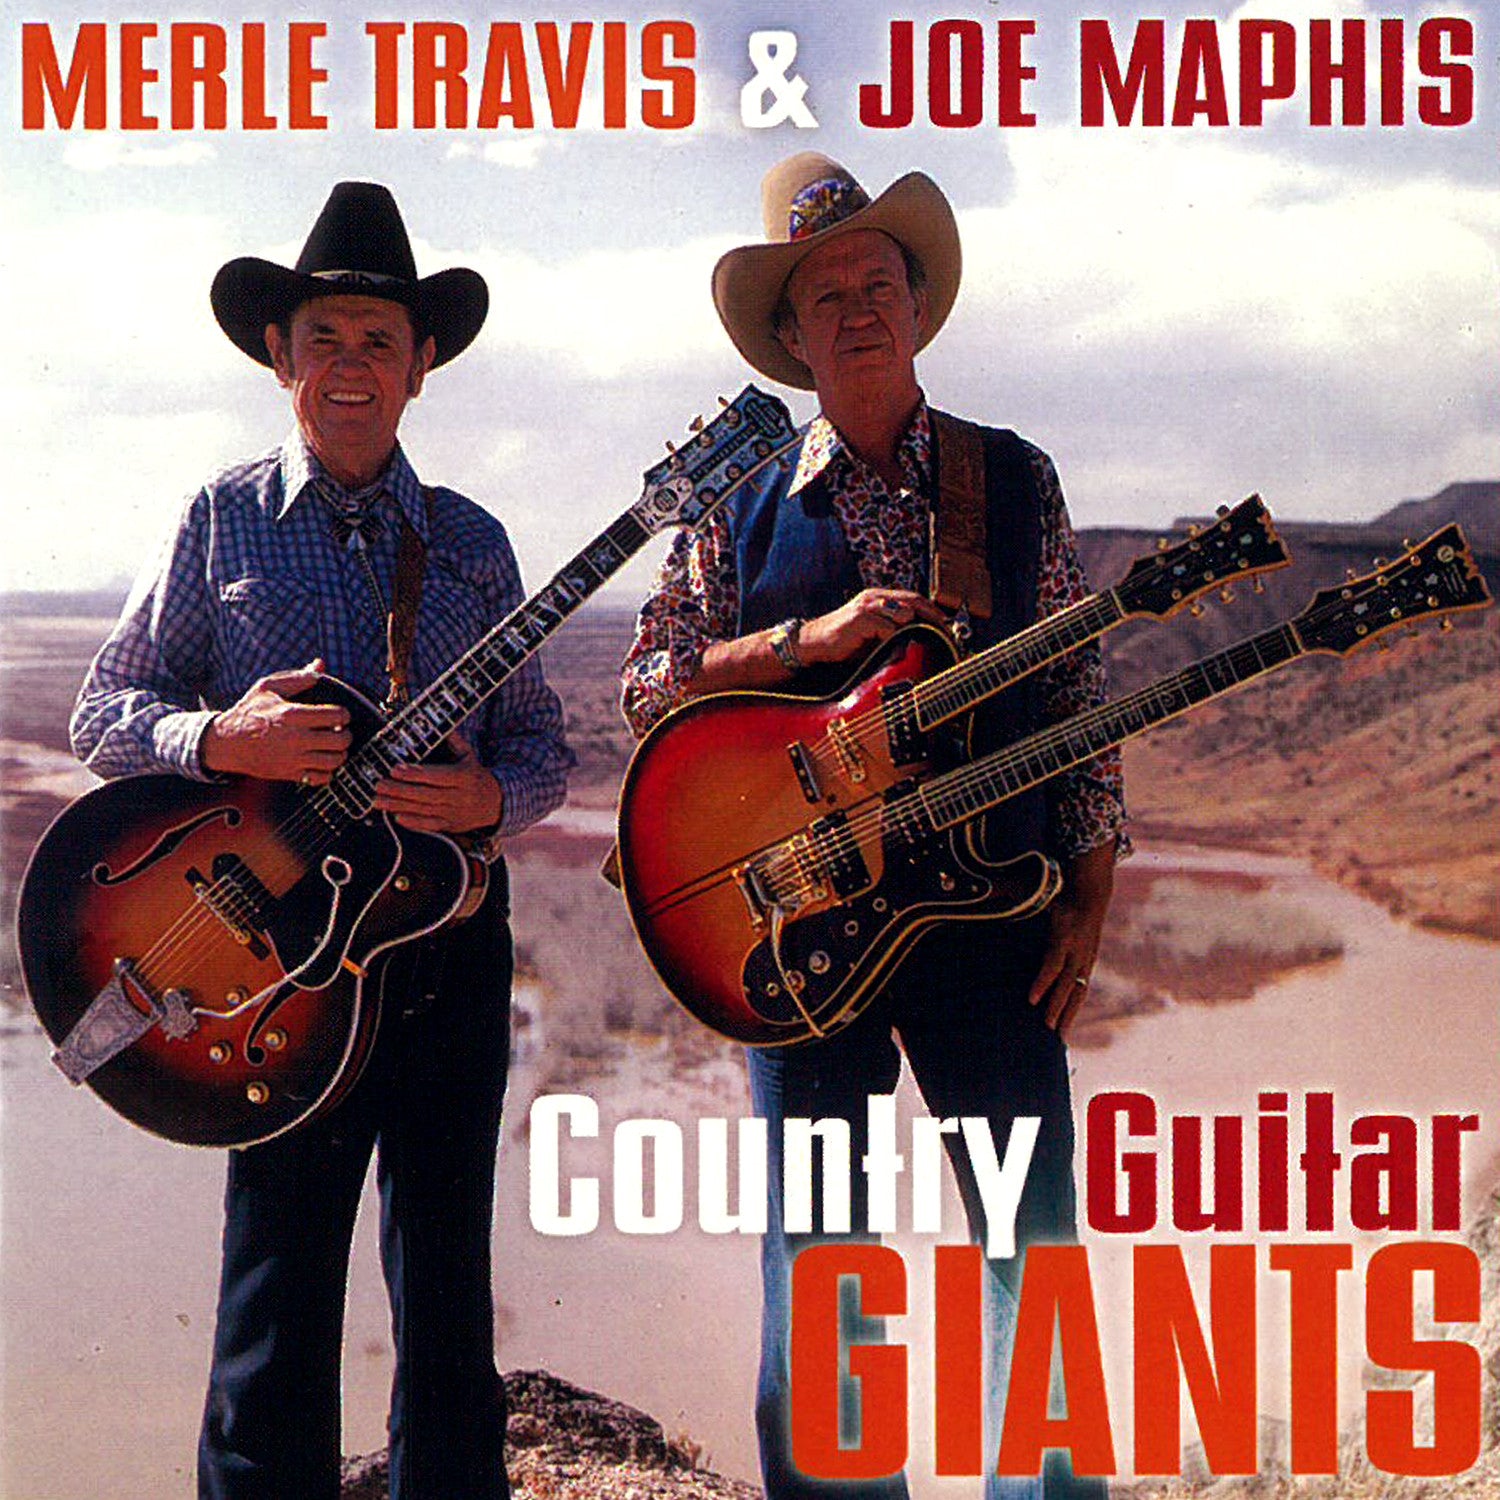 Merle Travis & Joe Maphis: Country Guitar Giants